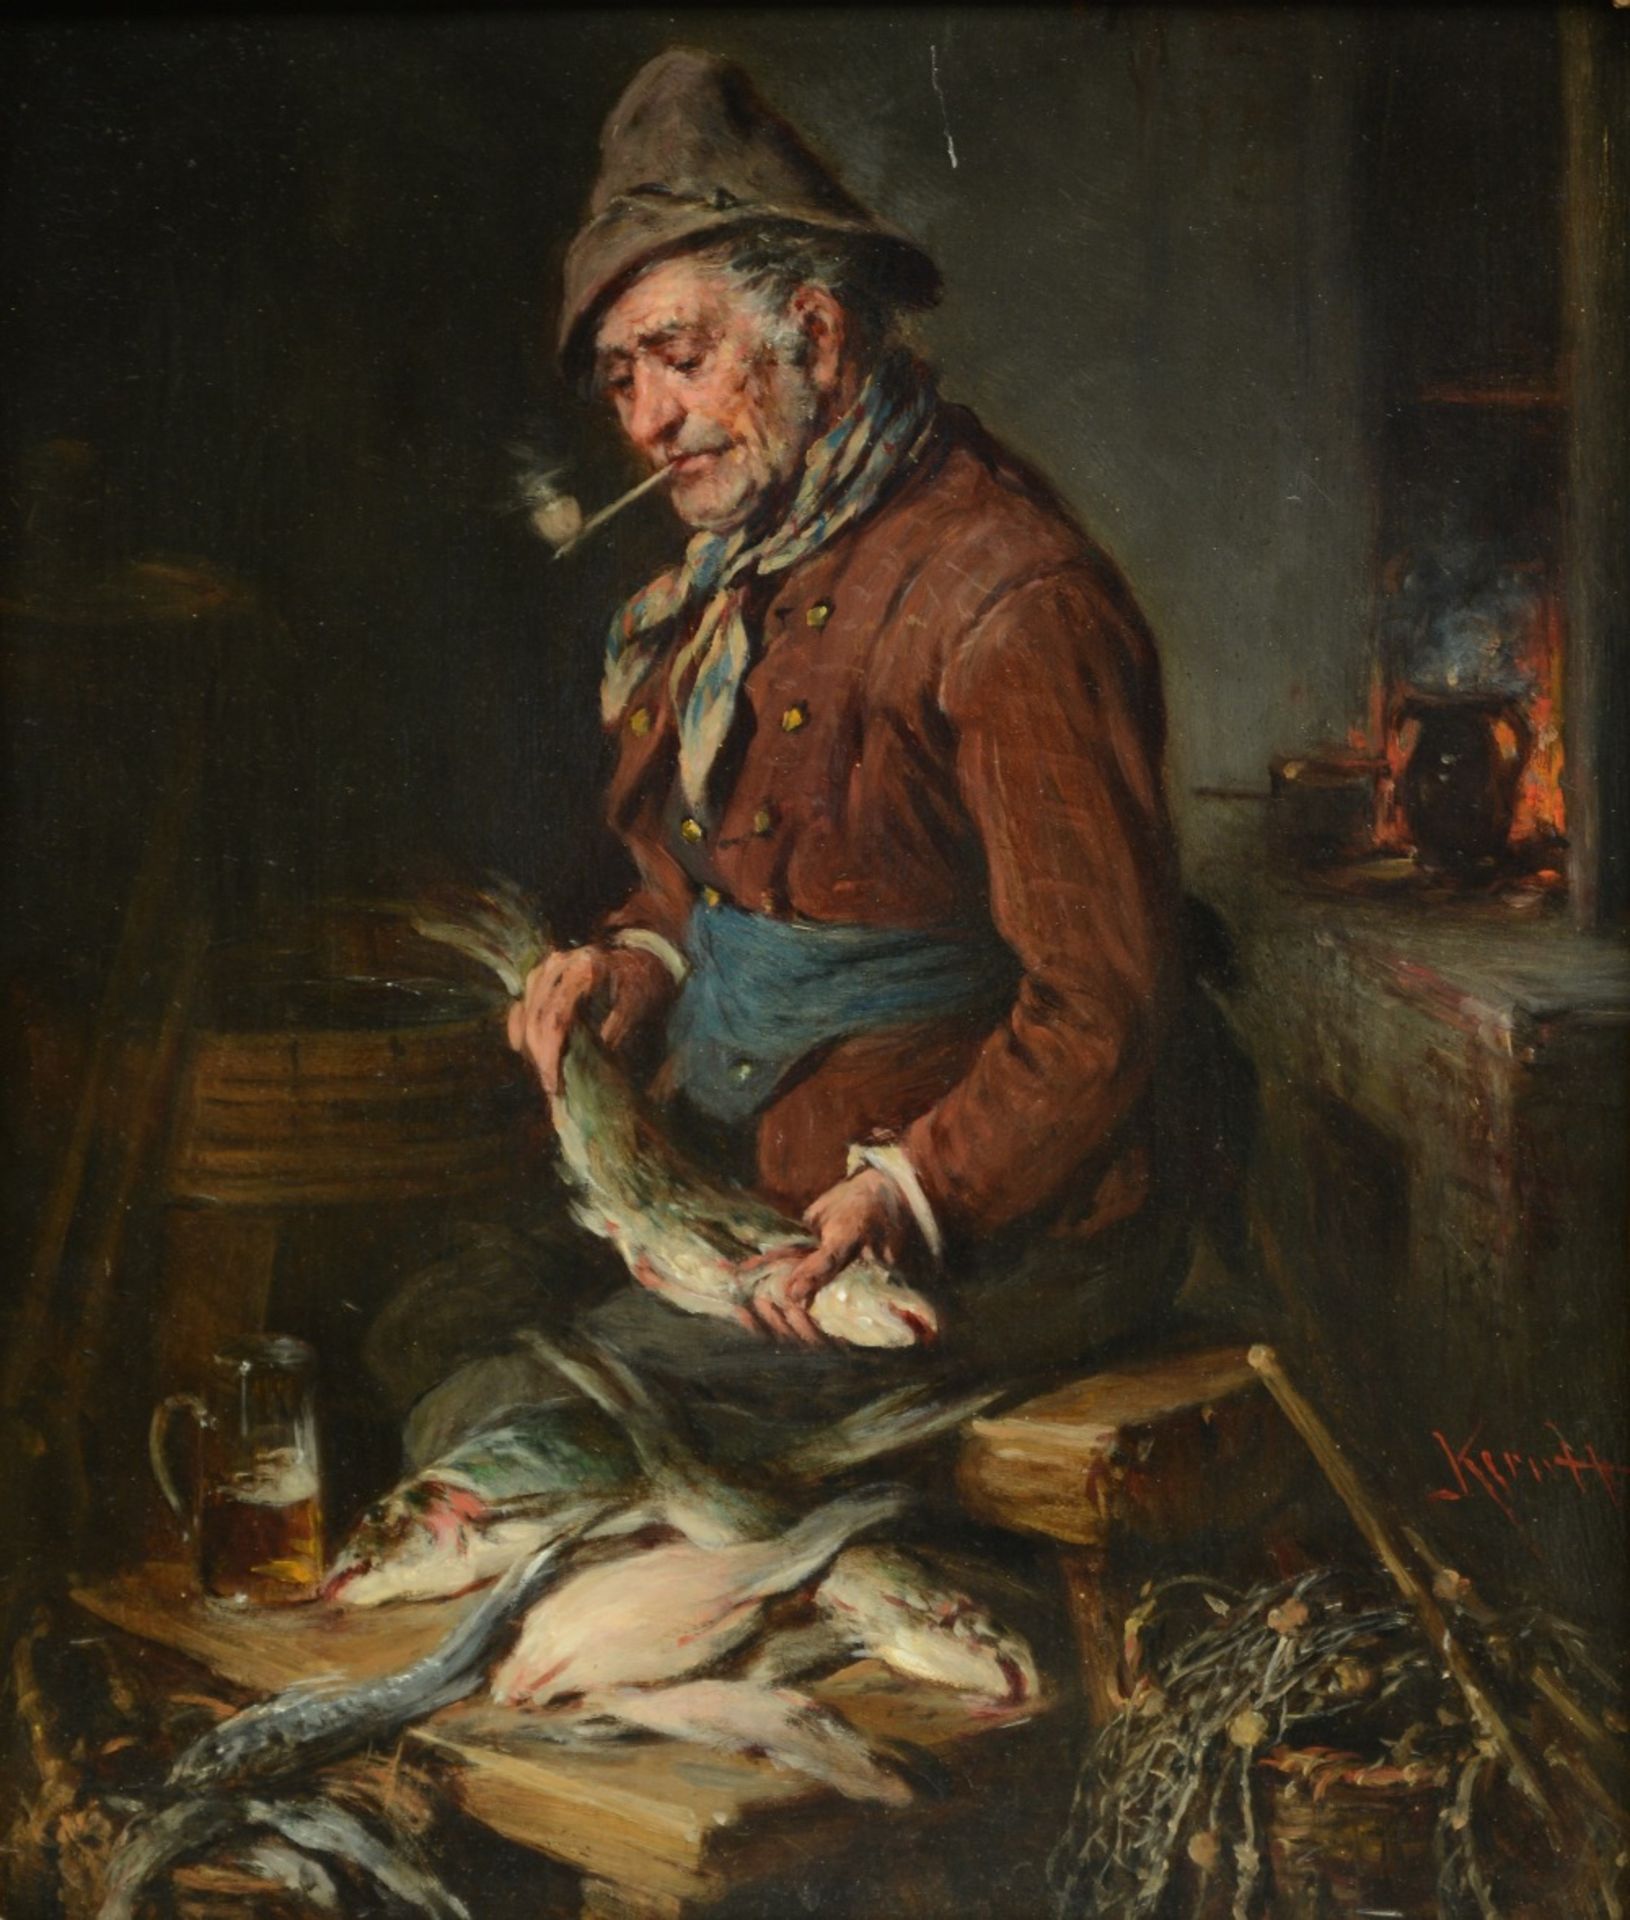 (Keruff?), 'Fischhändler', oil on panel, 19thC, 31,5 x 36,5 cm